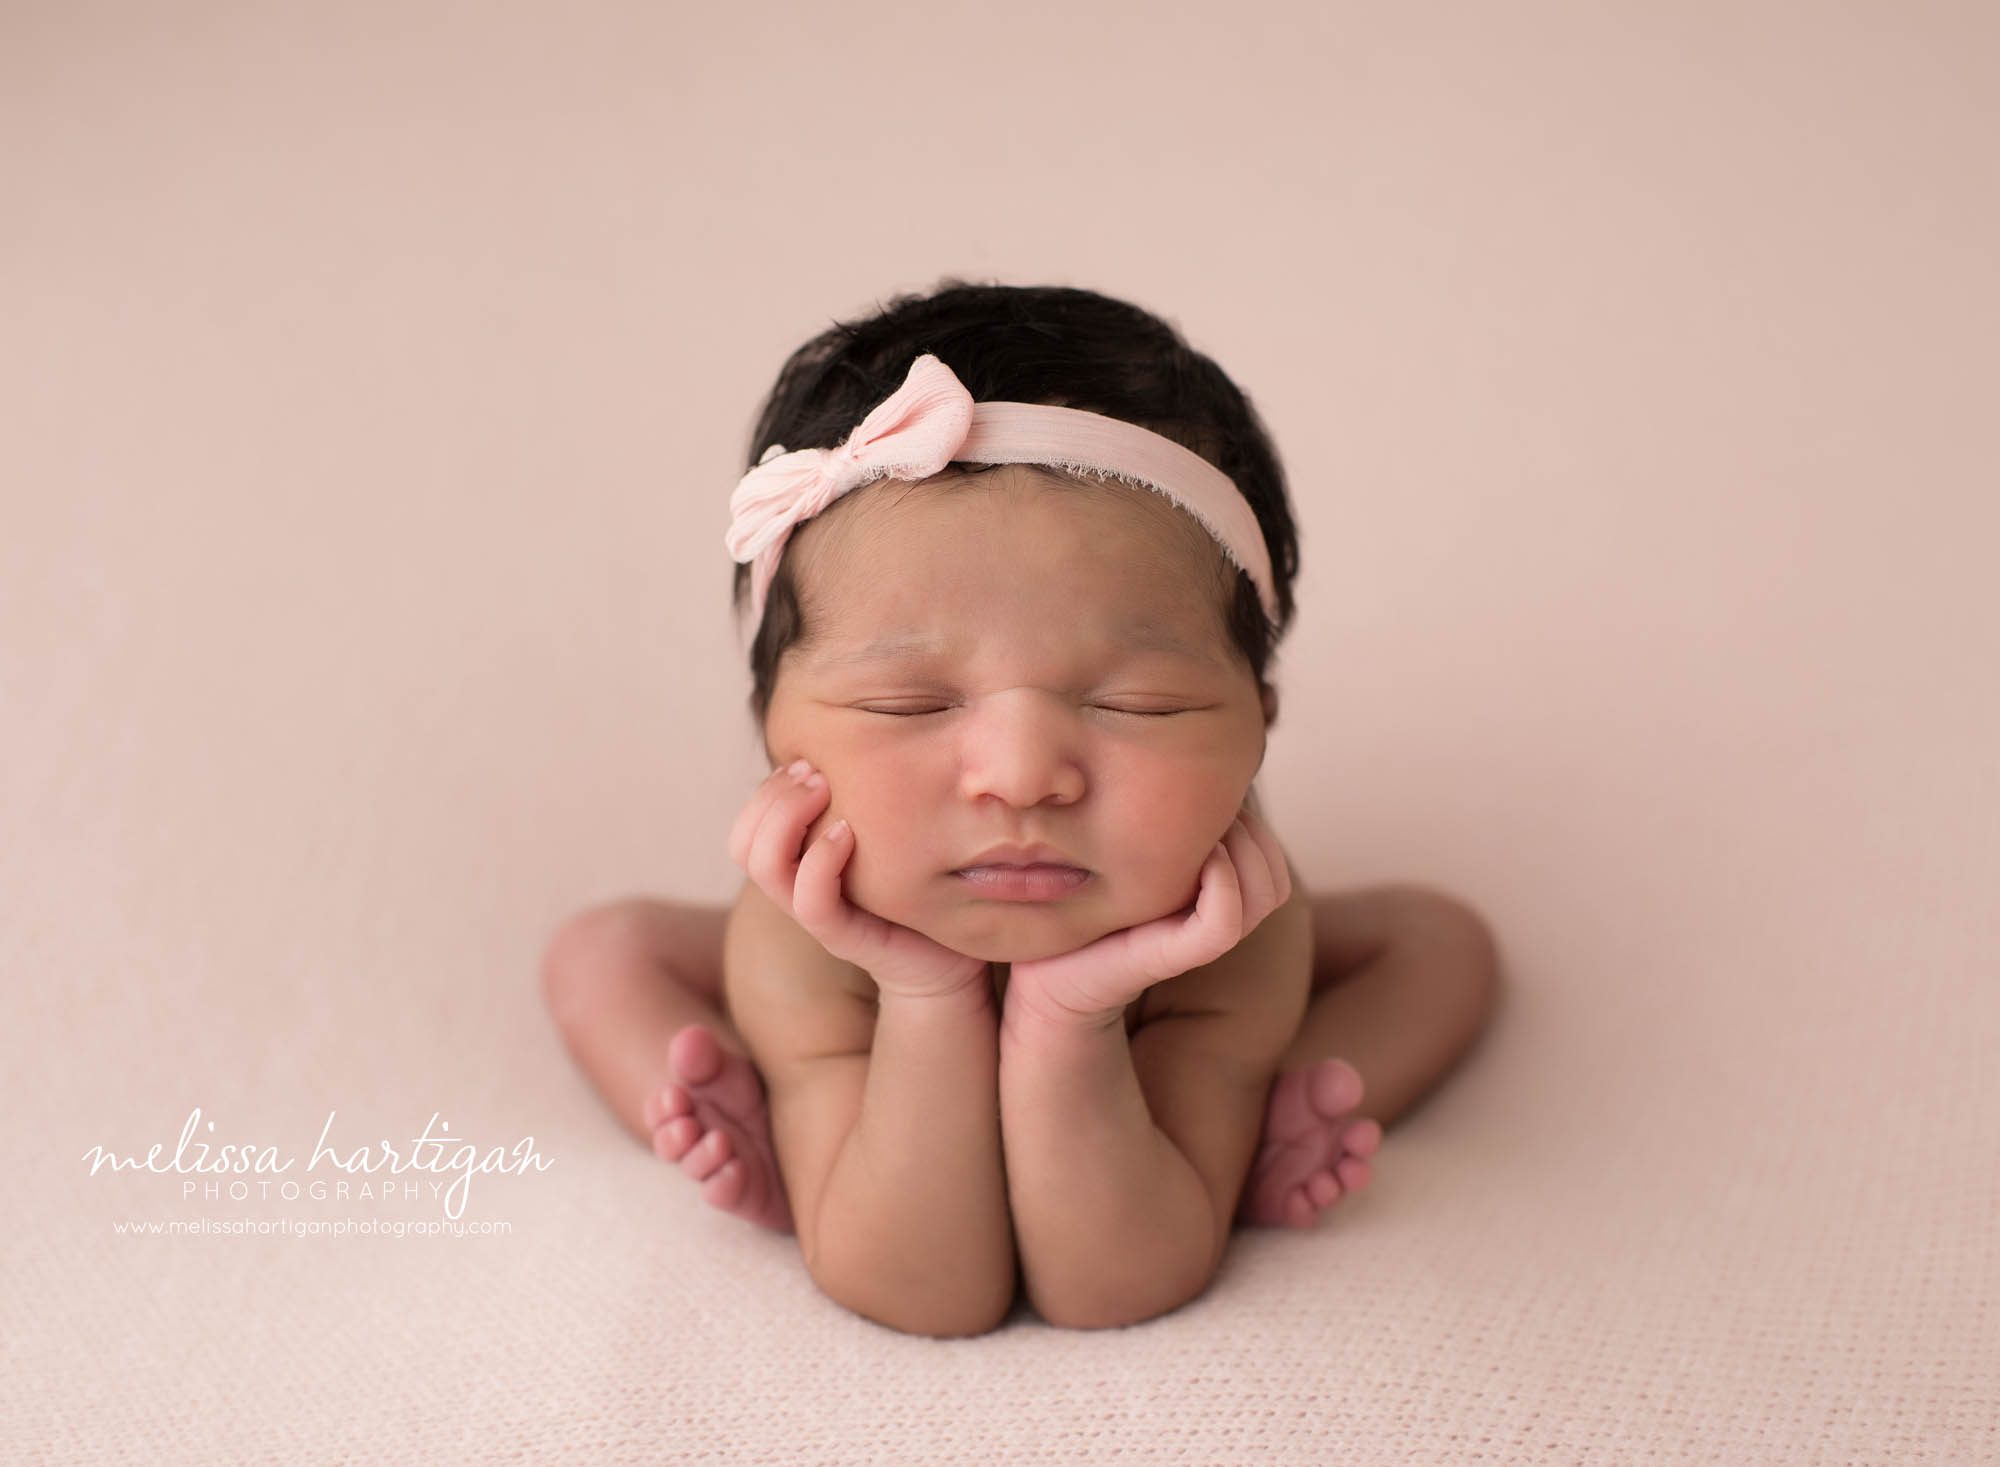 newborn baby girl posed froggy pose wearing pink bow headband